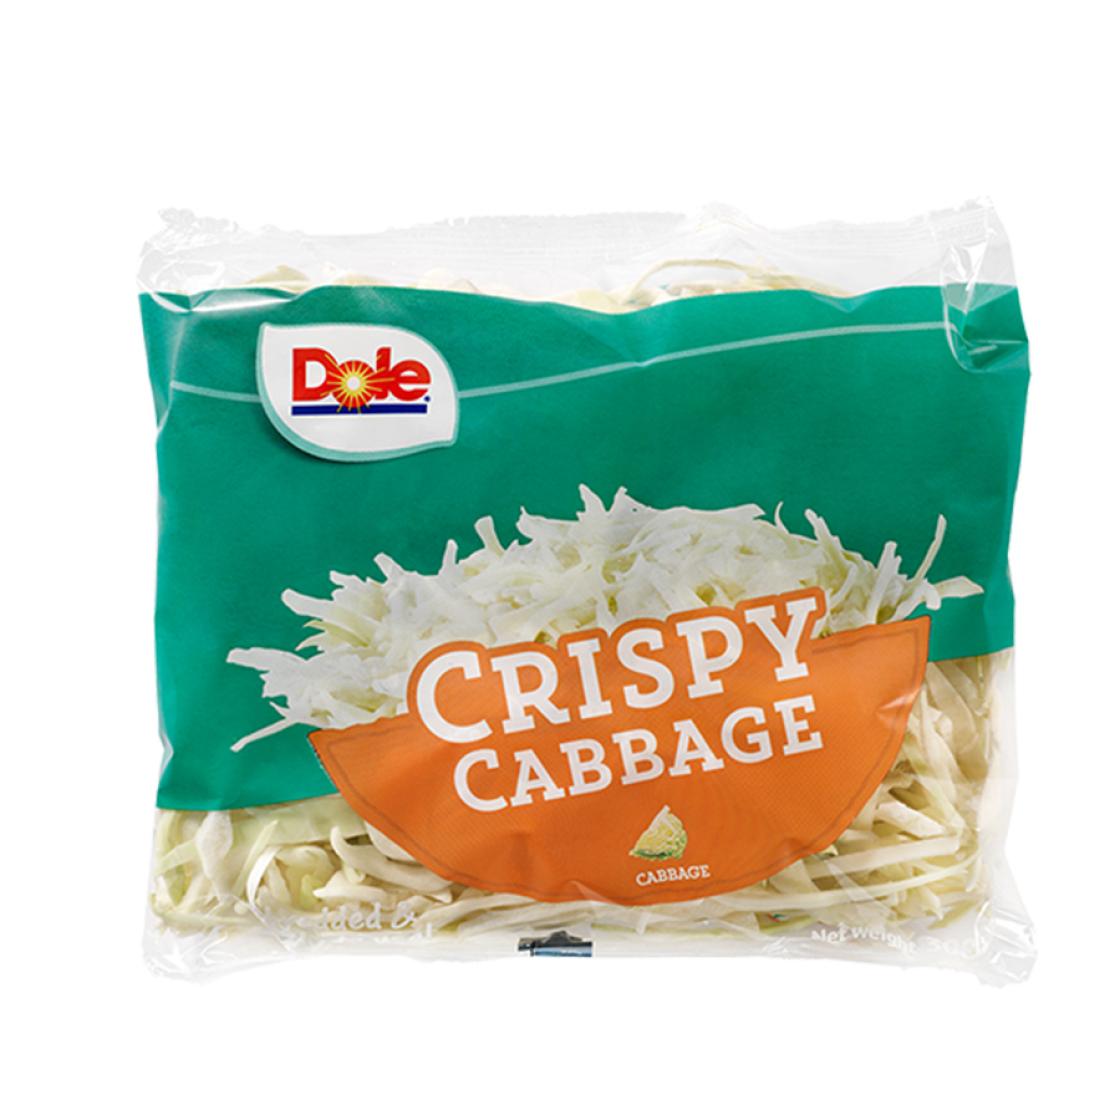 Crispy cabbage 900x900px